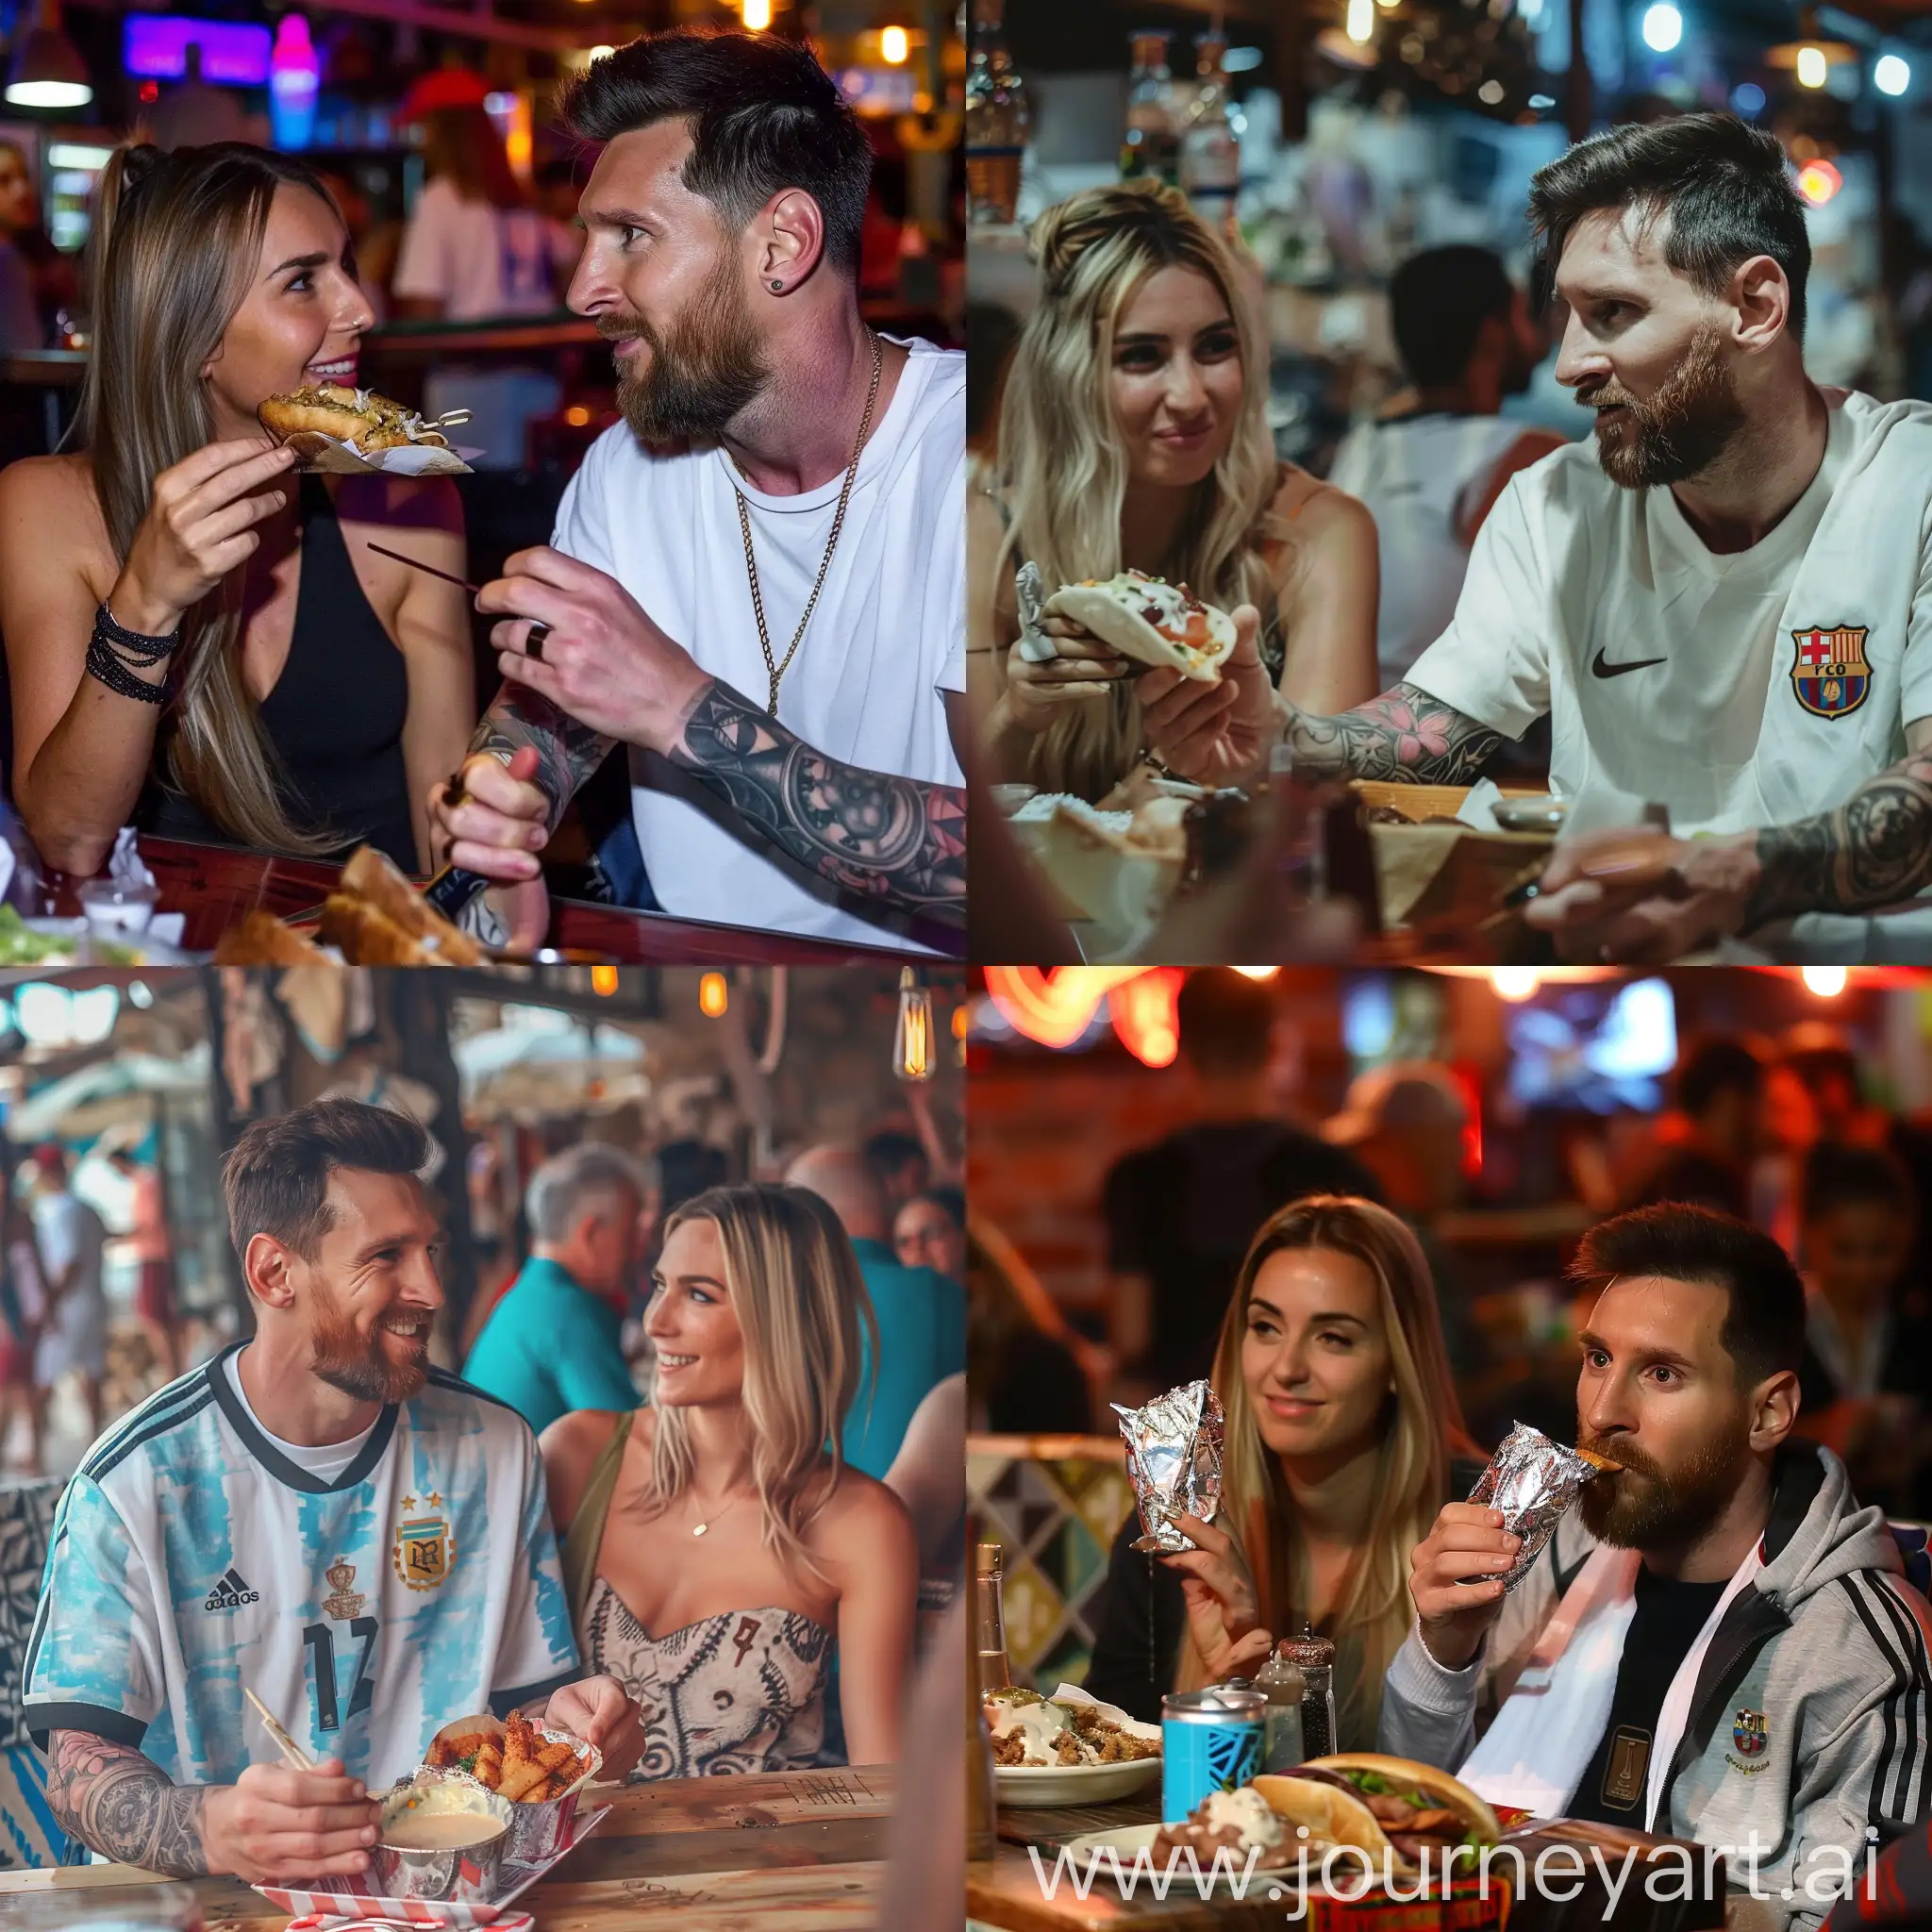 Lionel-Messi-Enjoying-Gyro-with-Girlfriend-in-Greek-Tavern